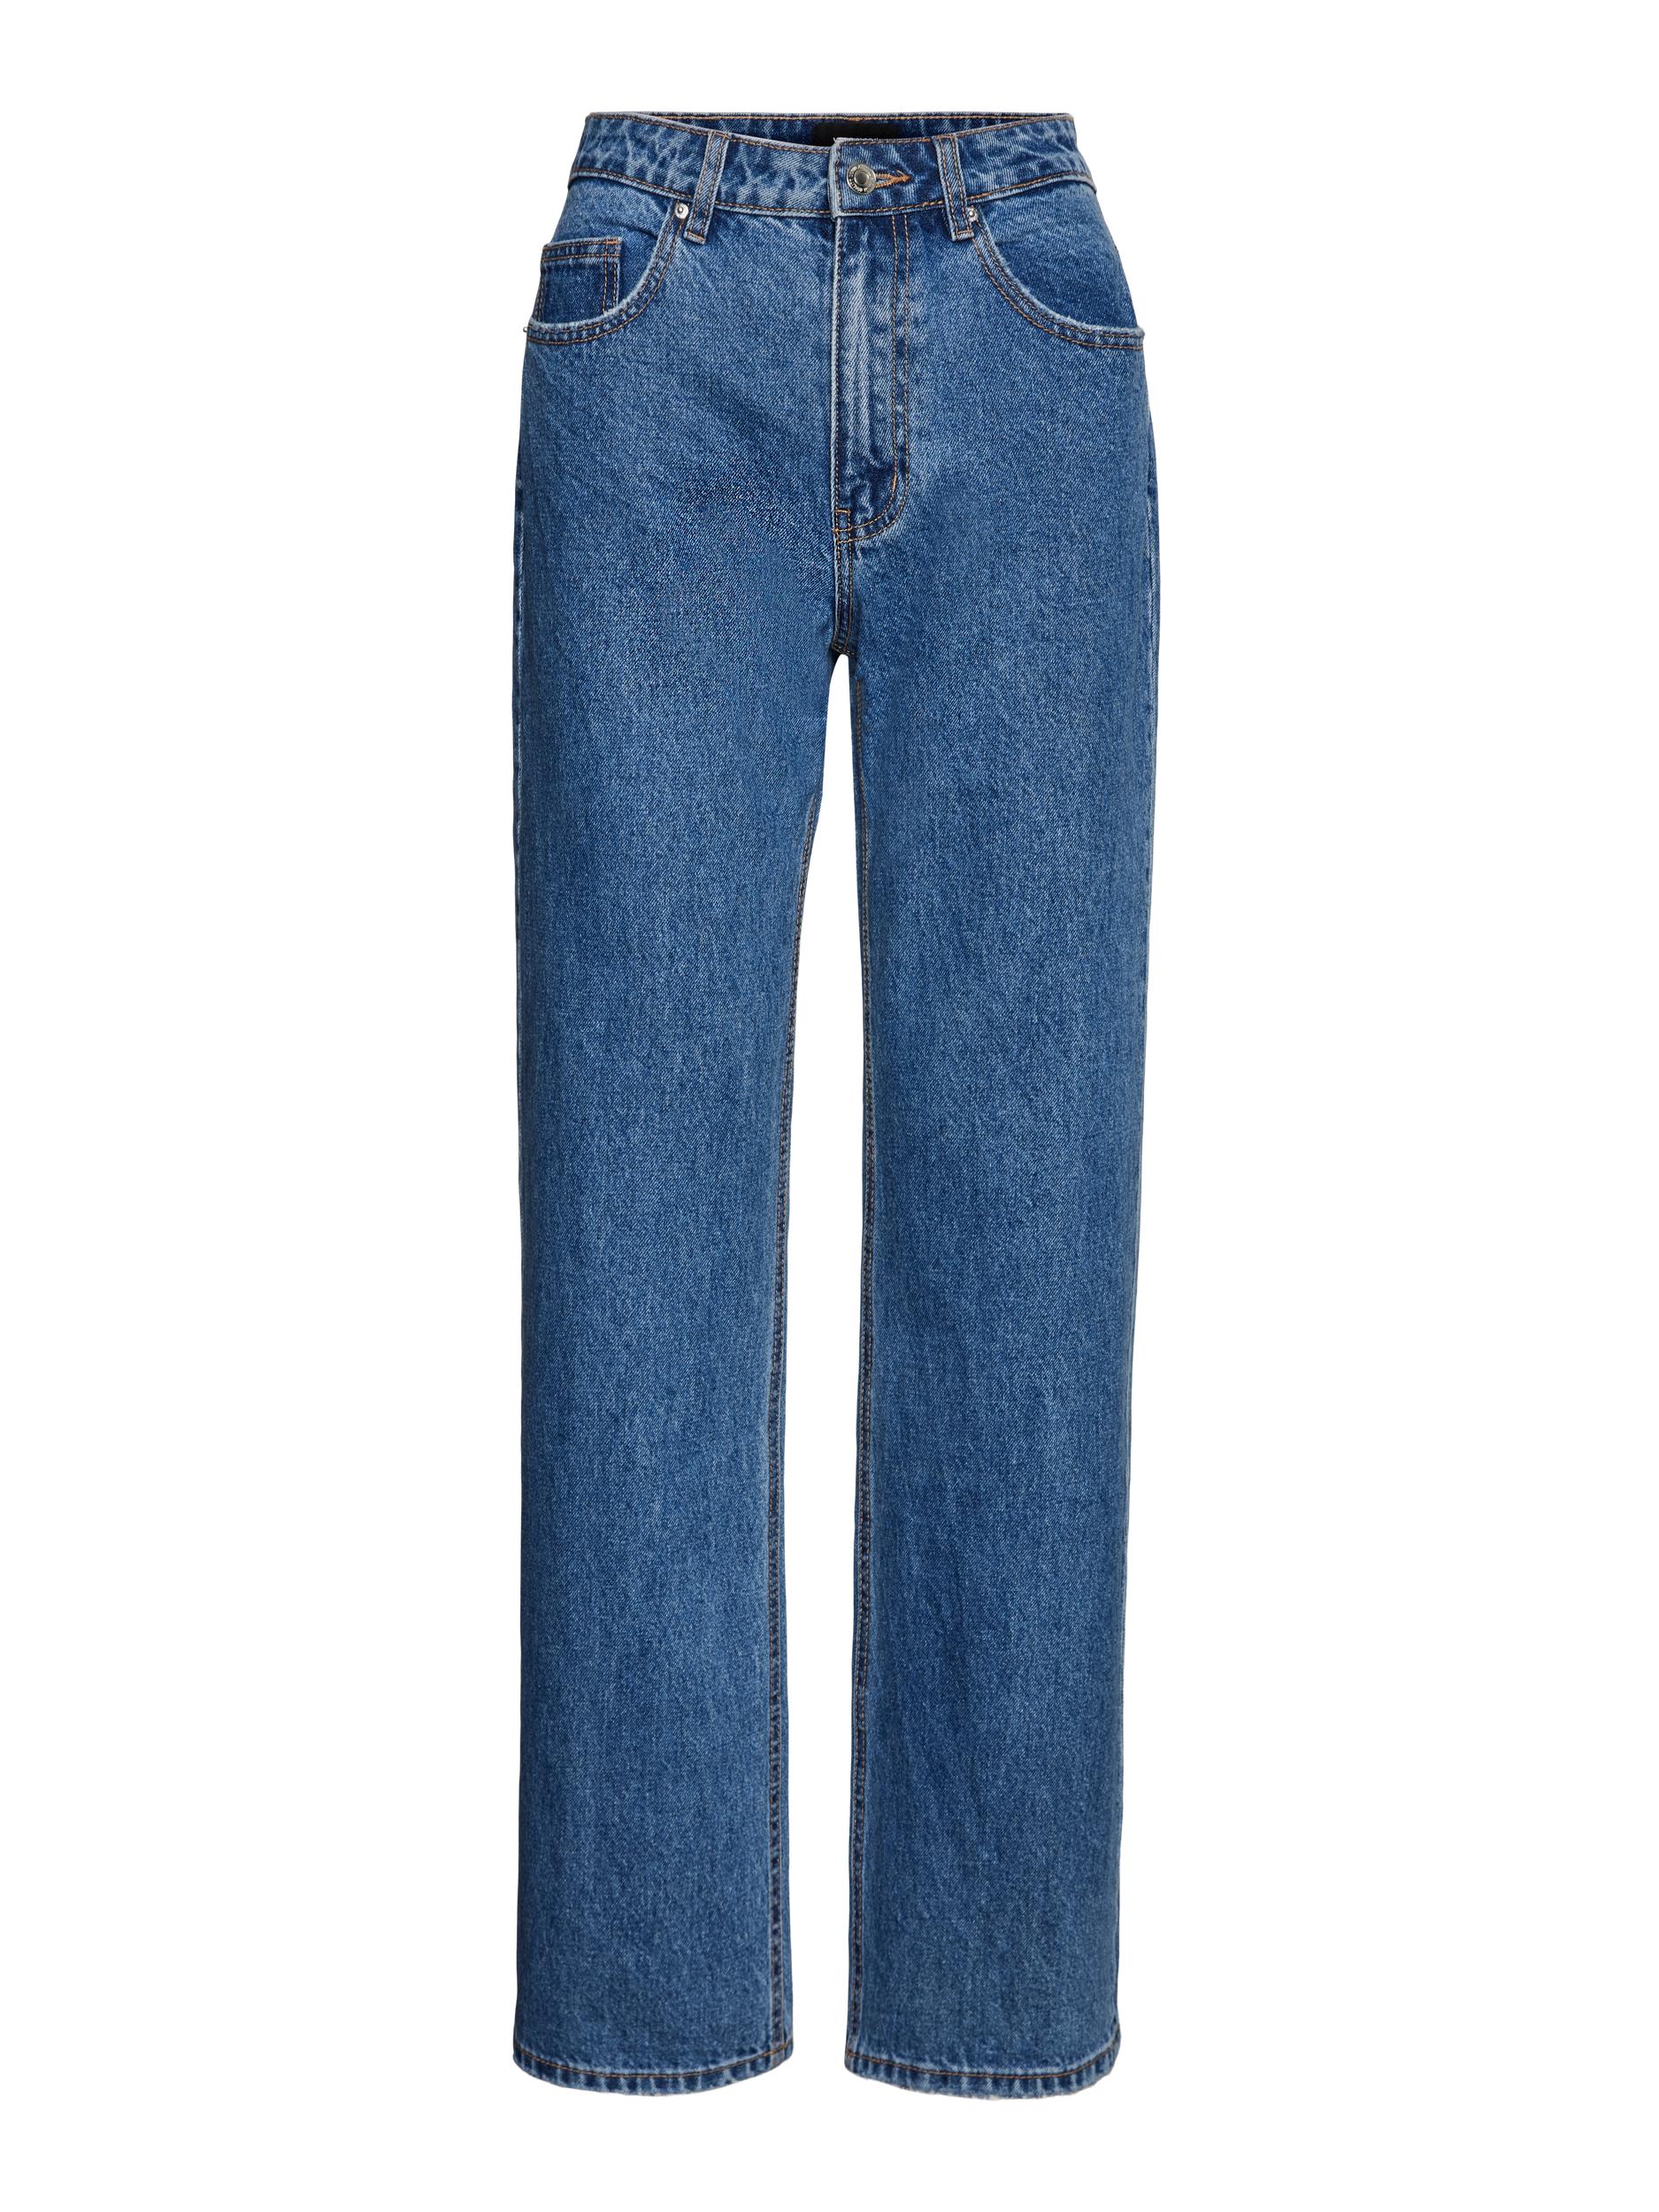 Kithy Jeans, Medium Blue Denim, W29/L32